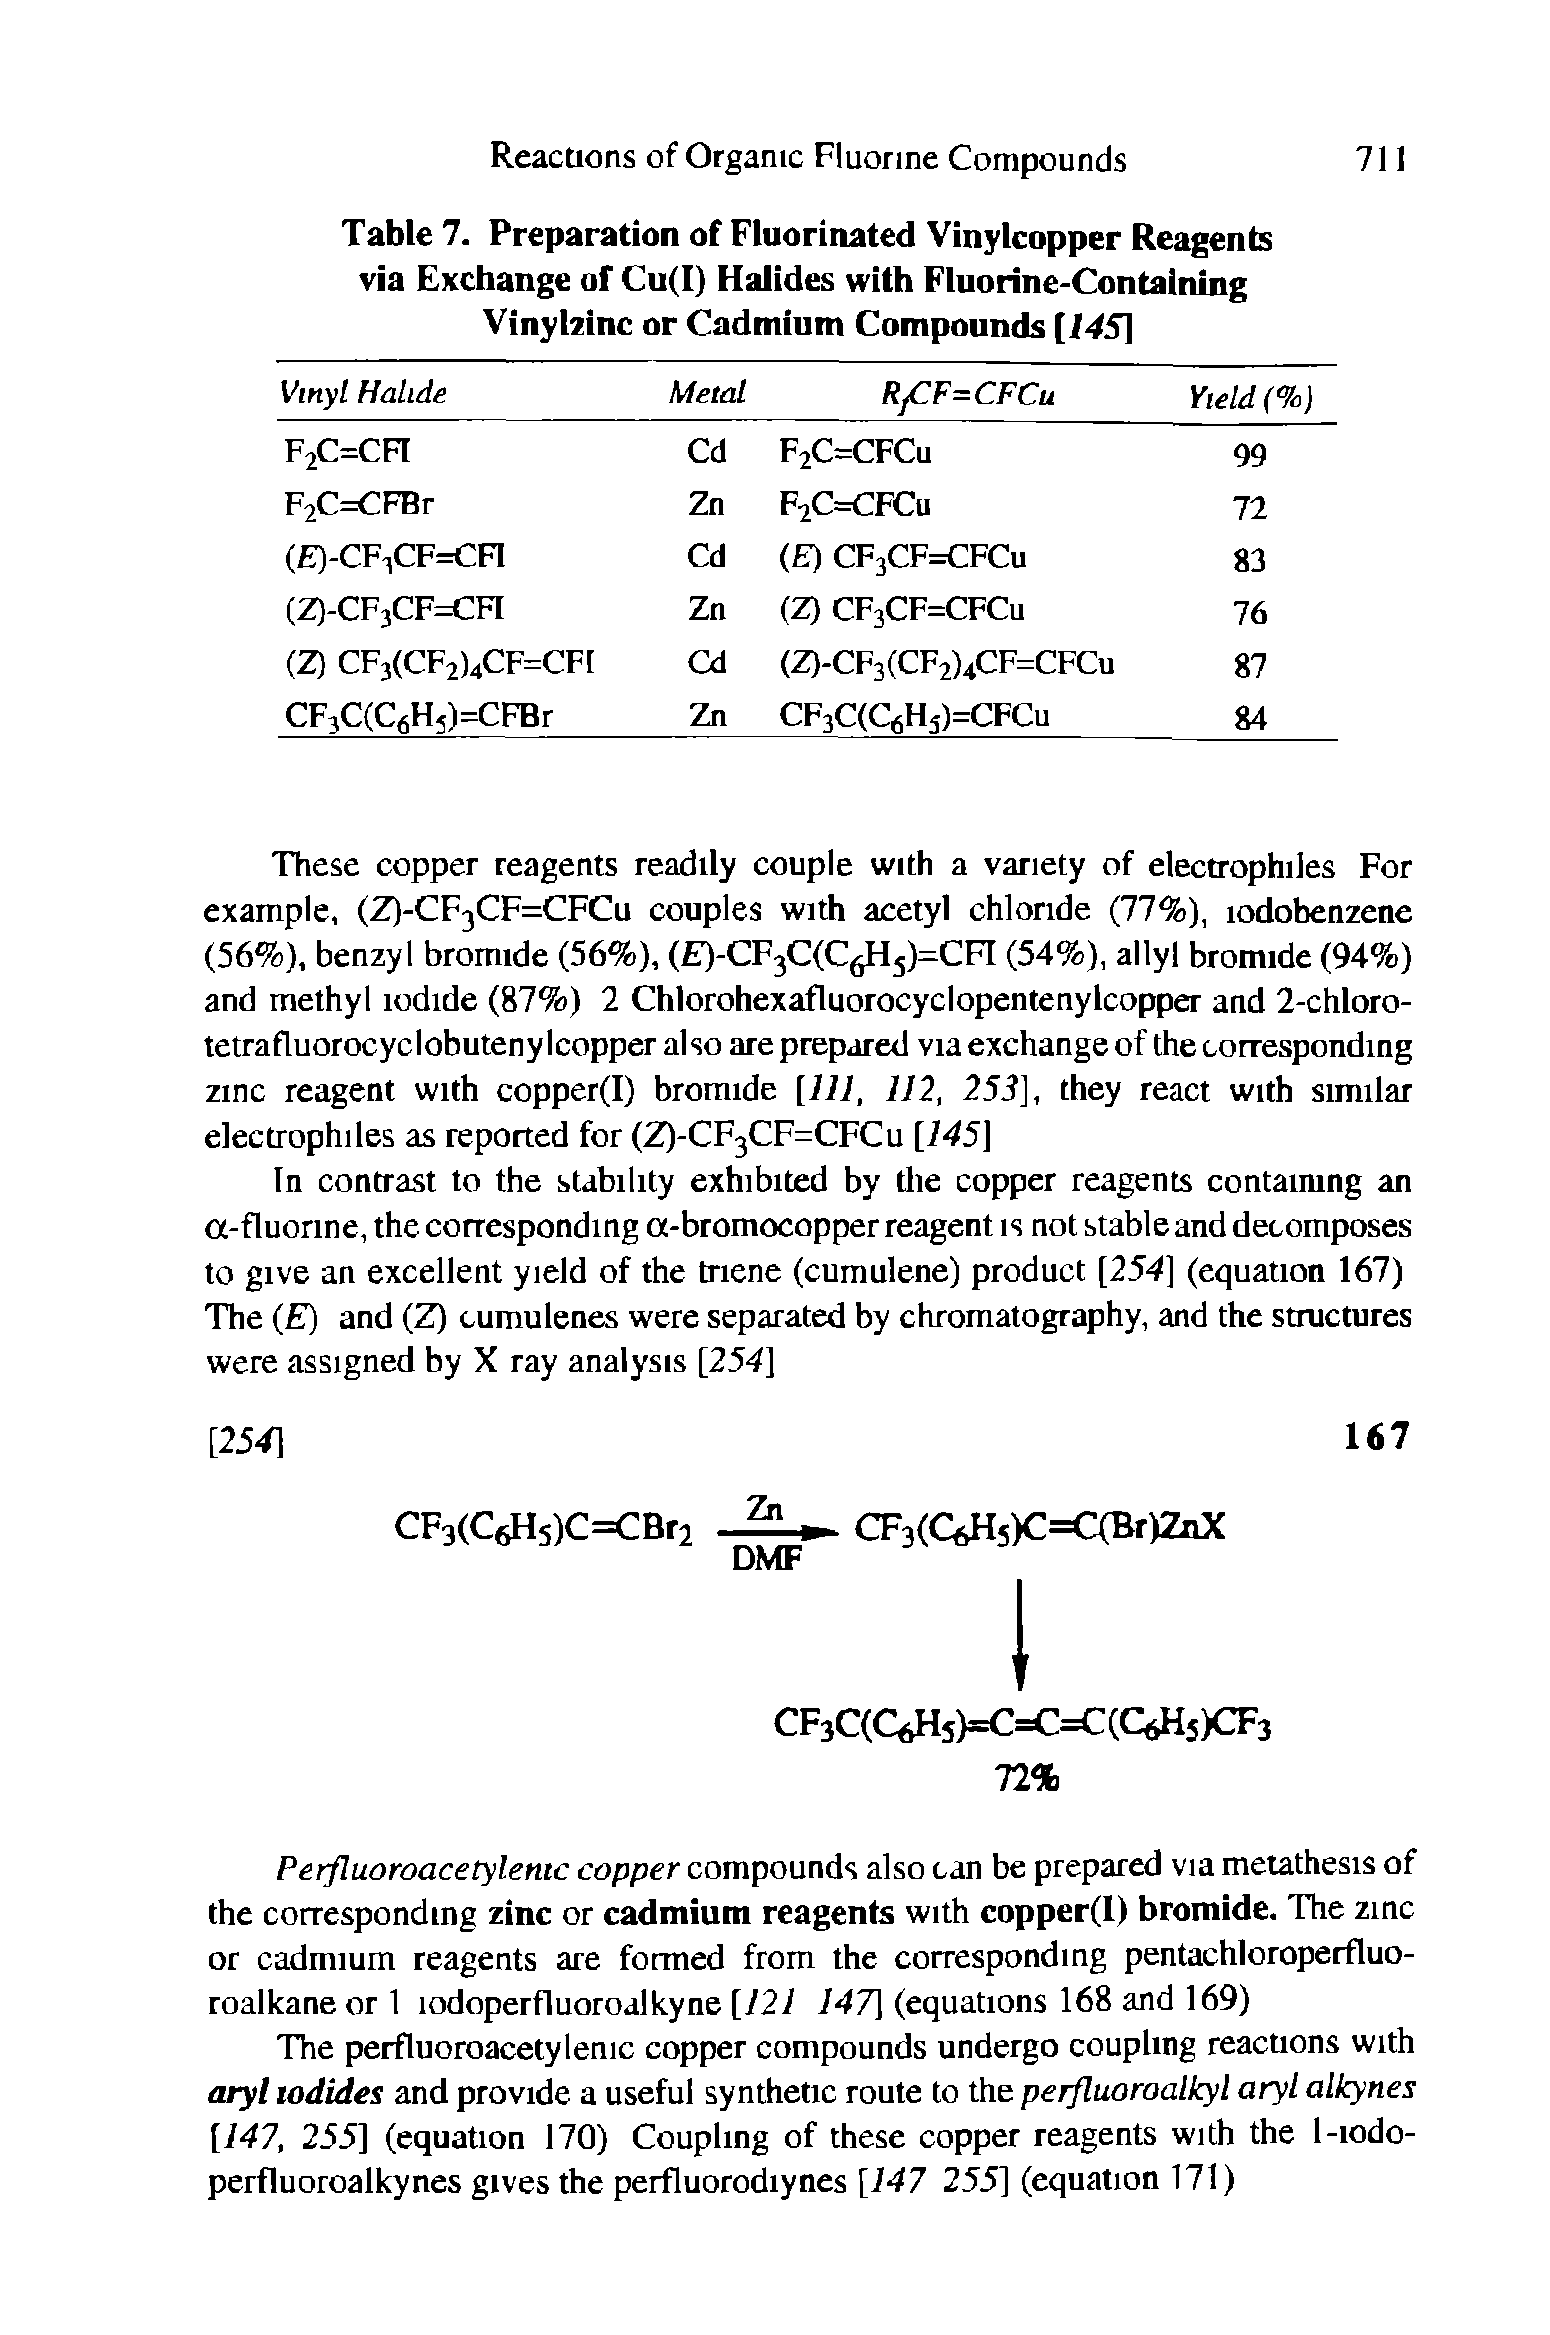 Table 7. Preparation of Fluorinated Vinylcopper Reagents via Exchange of Cu(I) Halides with Fluorine-Containing Vinybinc or Cadmium Compounds [145]...